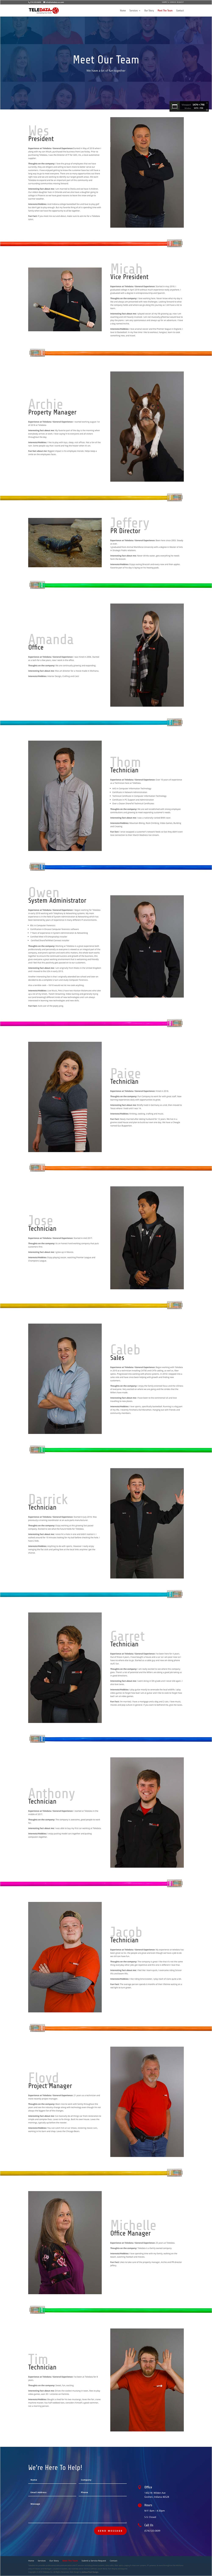 Teledata Business Web Design Project